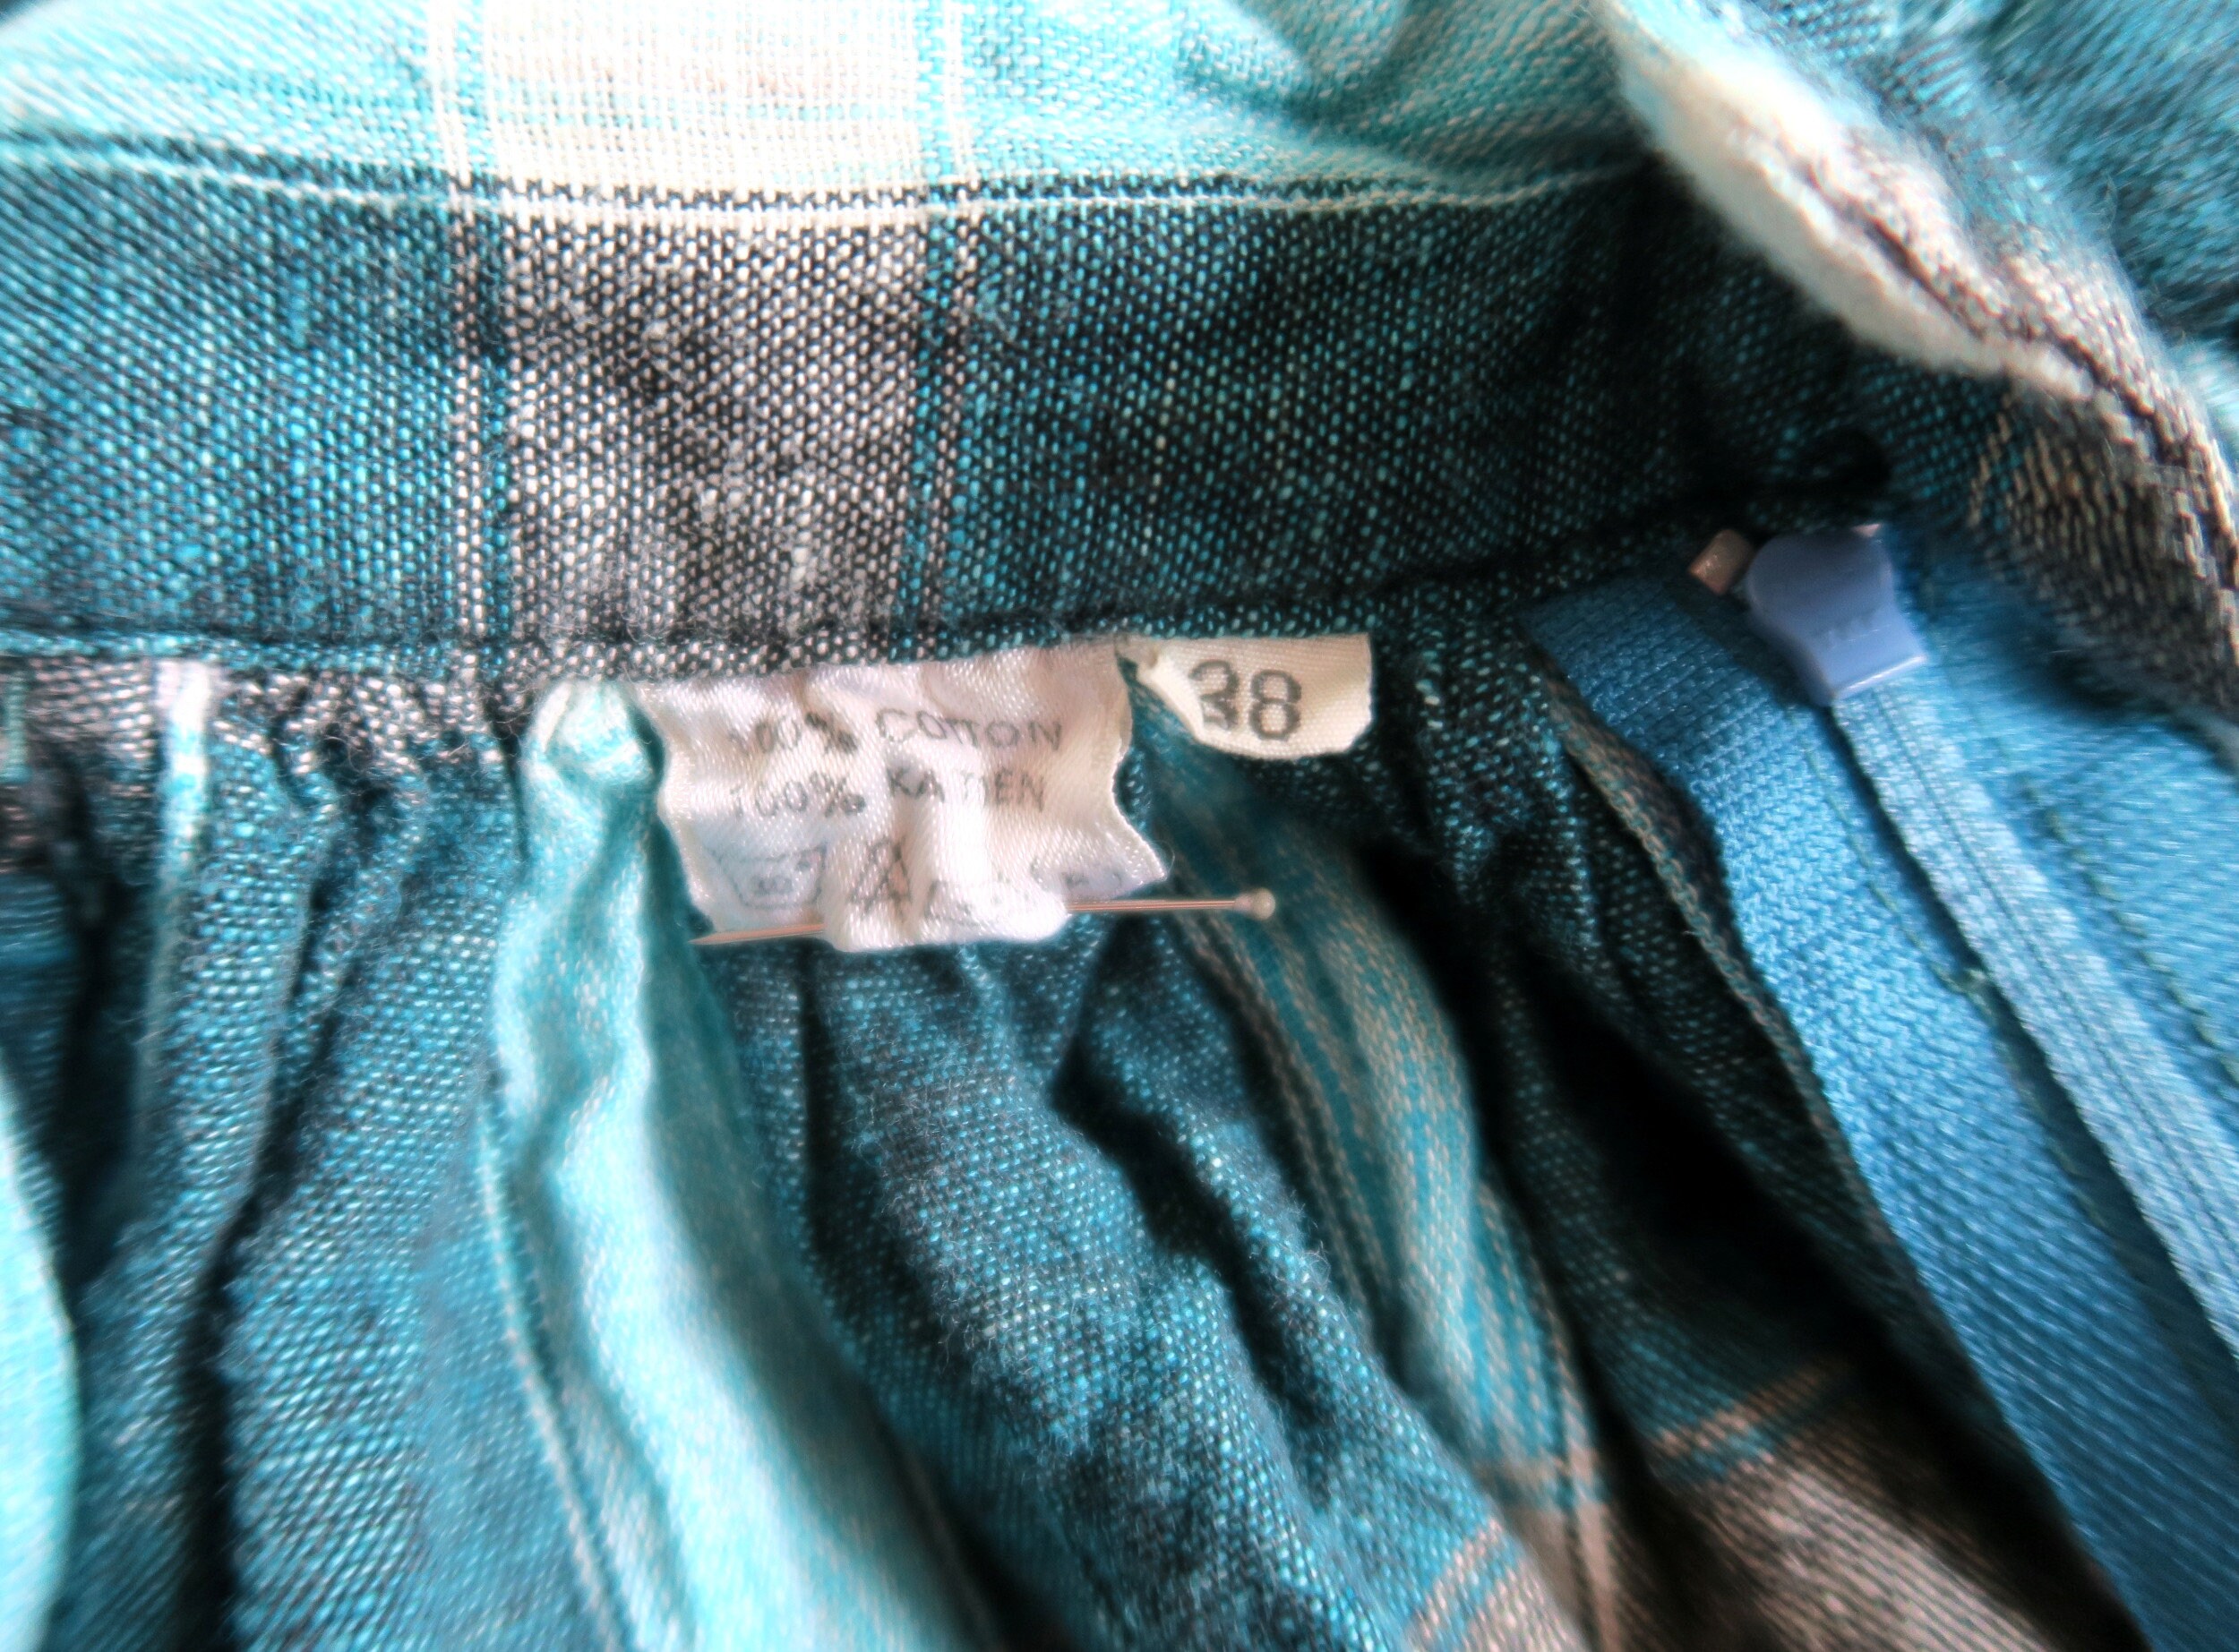 Madras Check Full Layered Skirt Teal Green Aqua Blue Cotton - Etsy